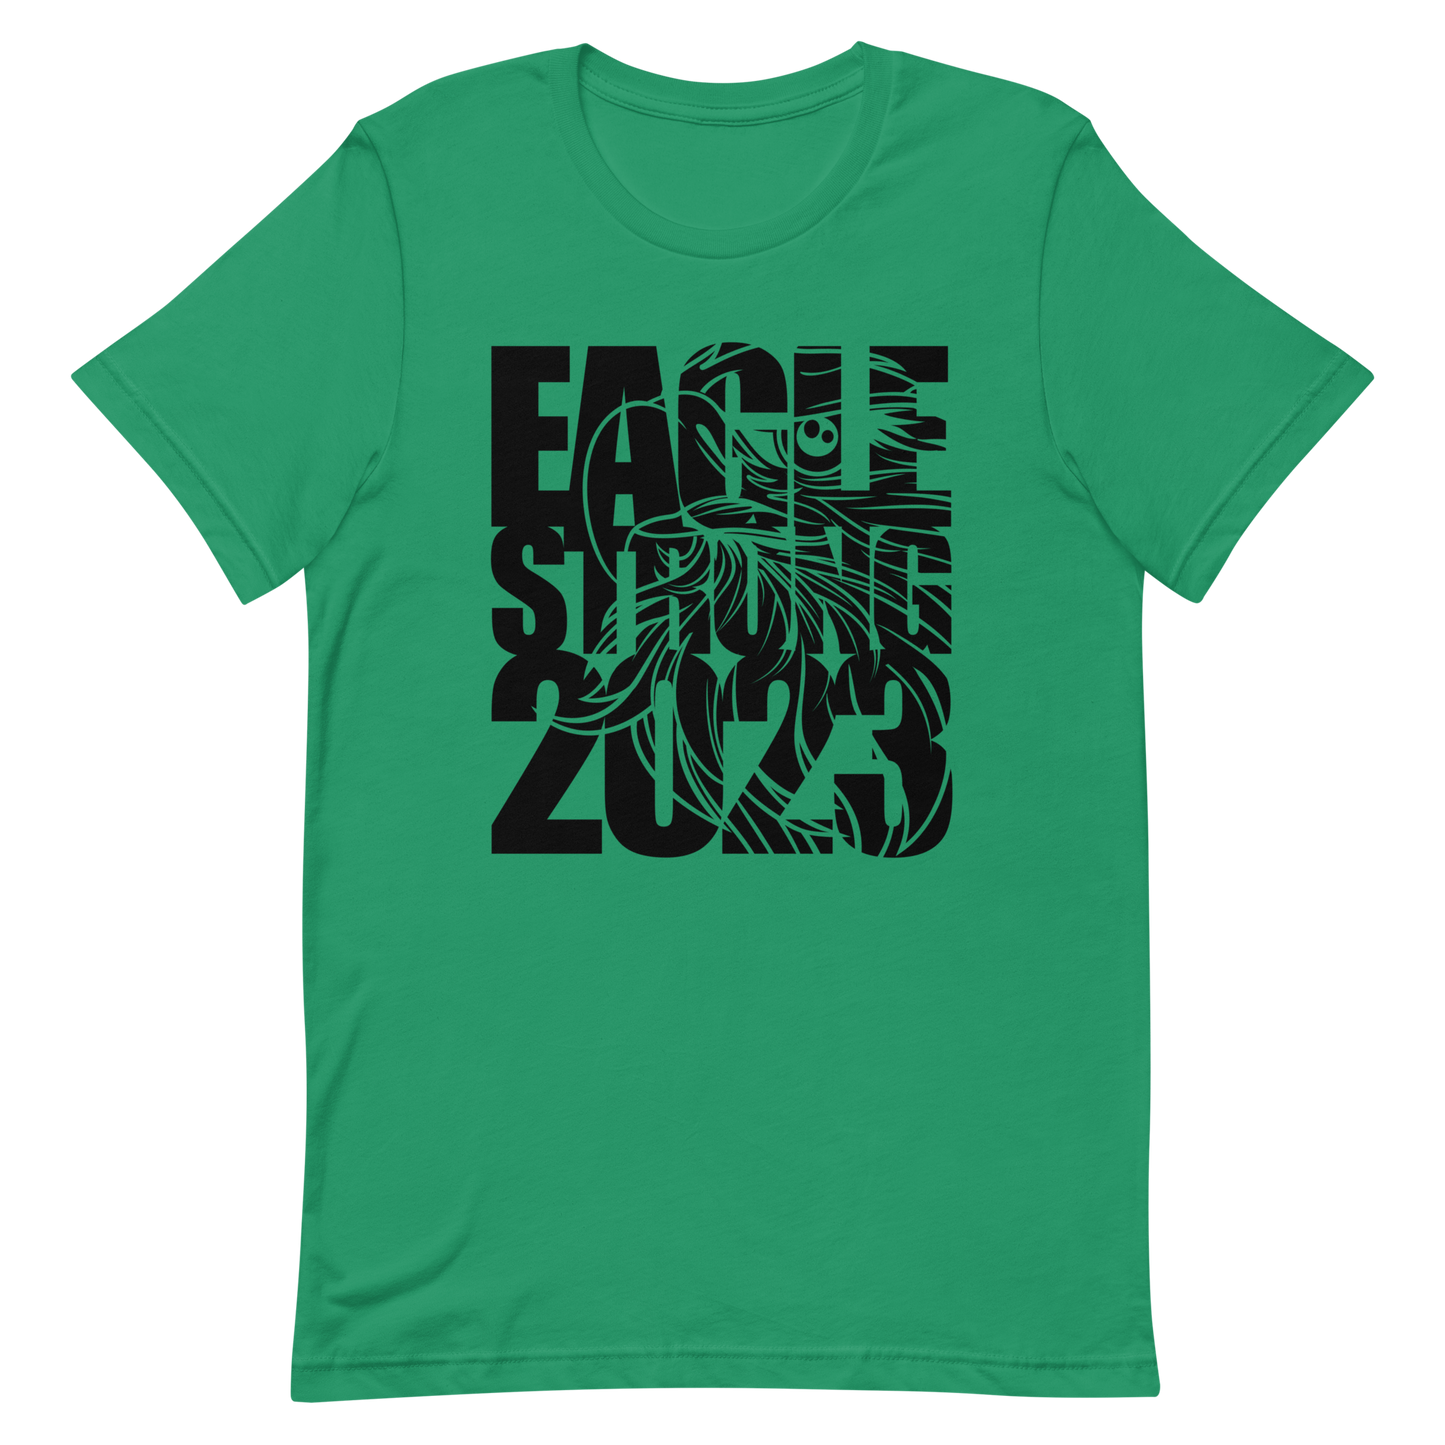 Eagle Strong 2023 shirt